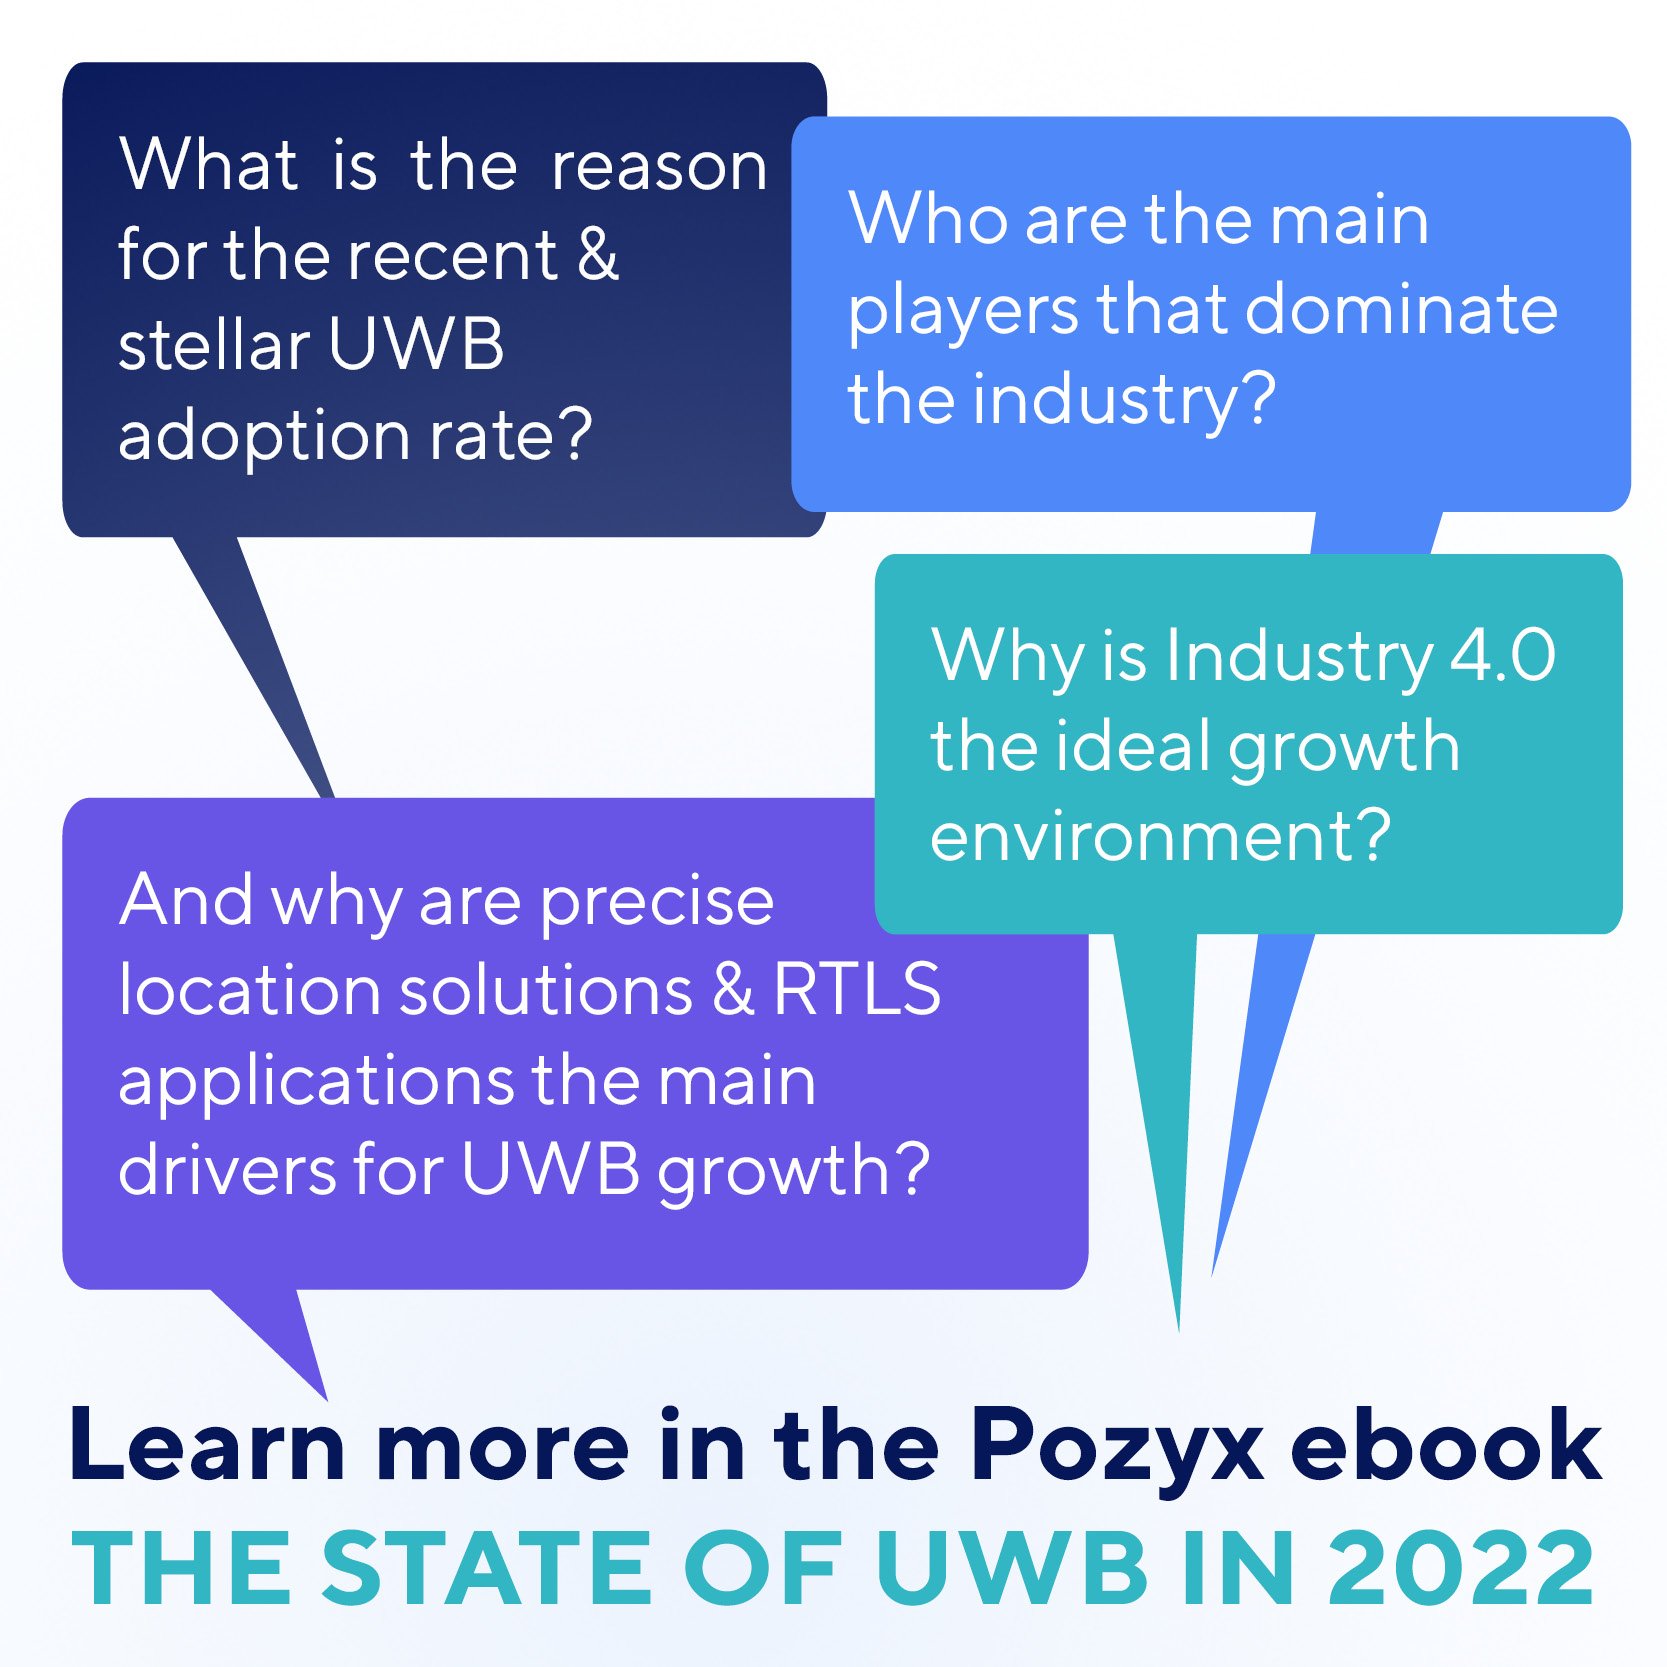 The success of UWB